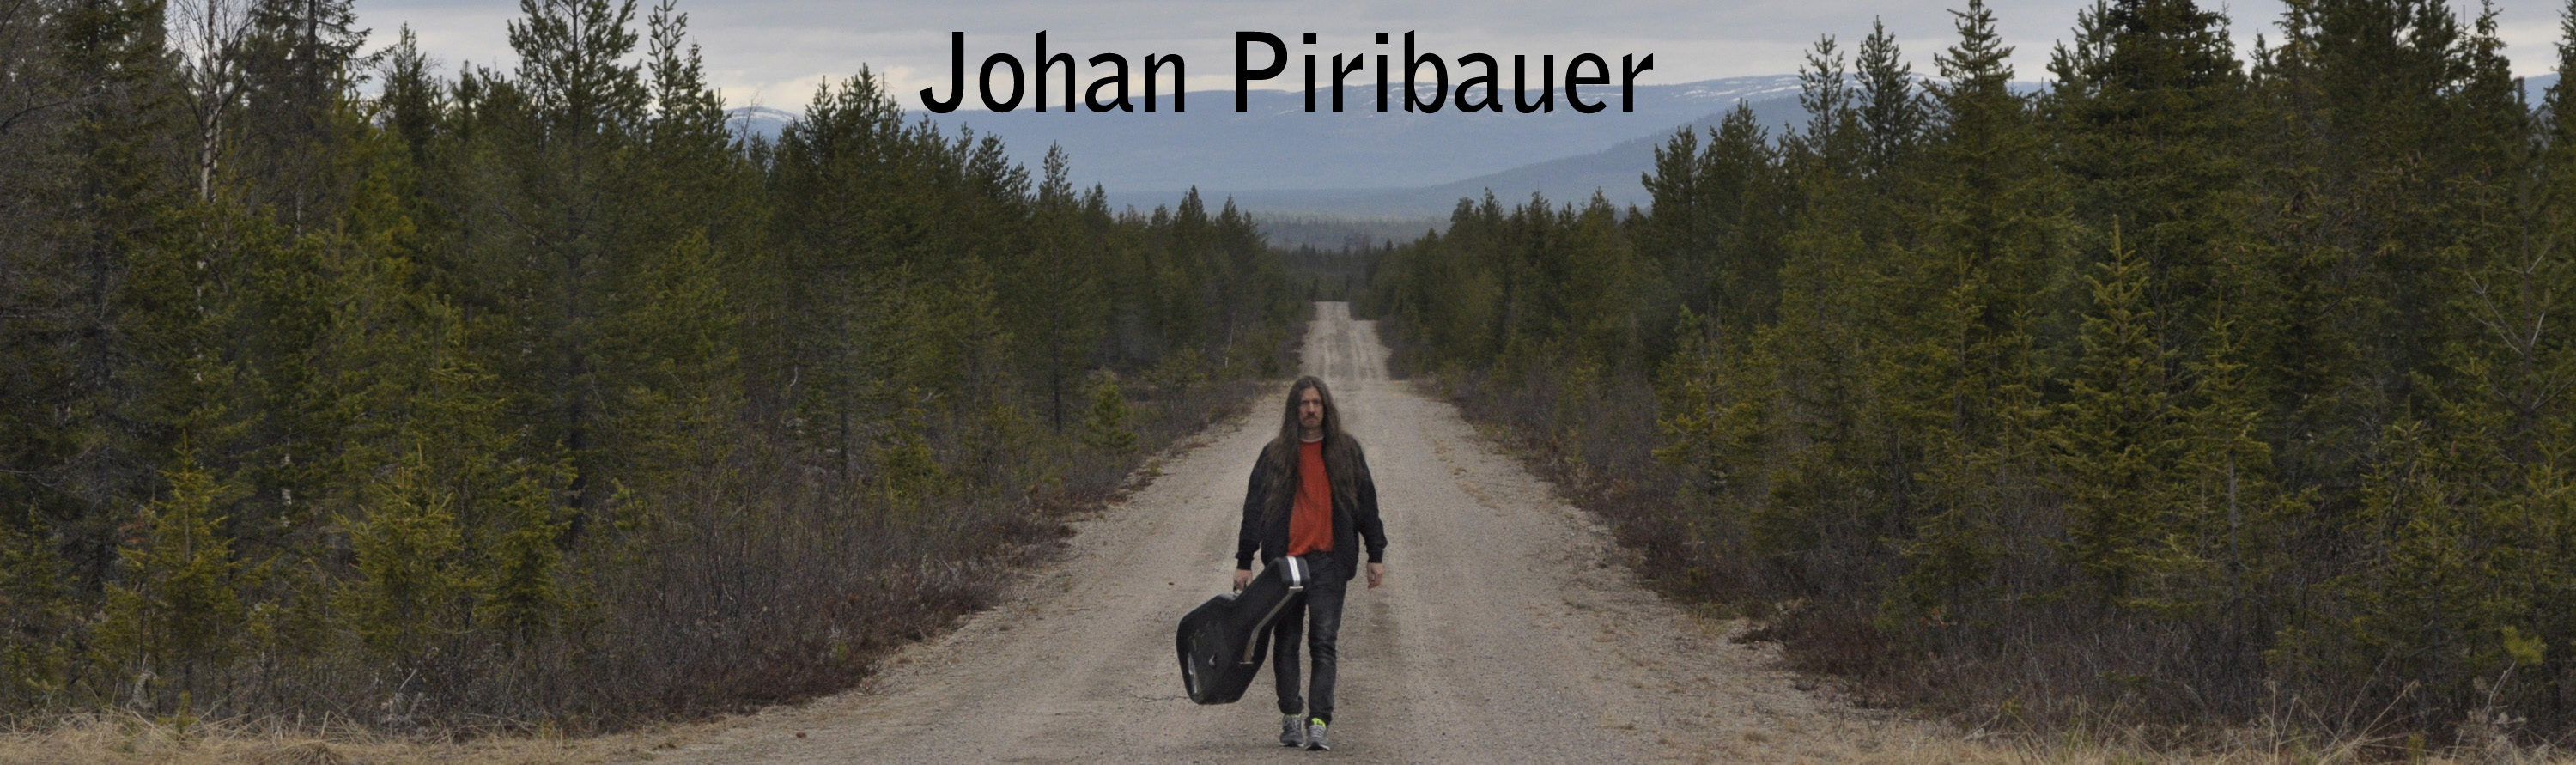 Johan Piribauer